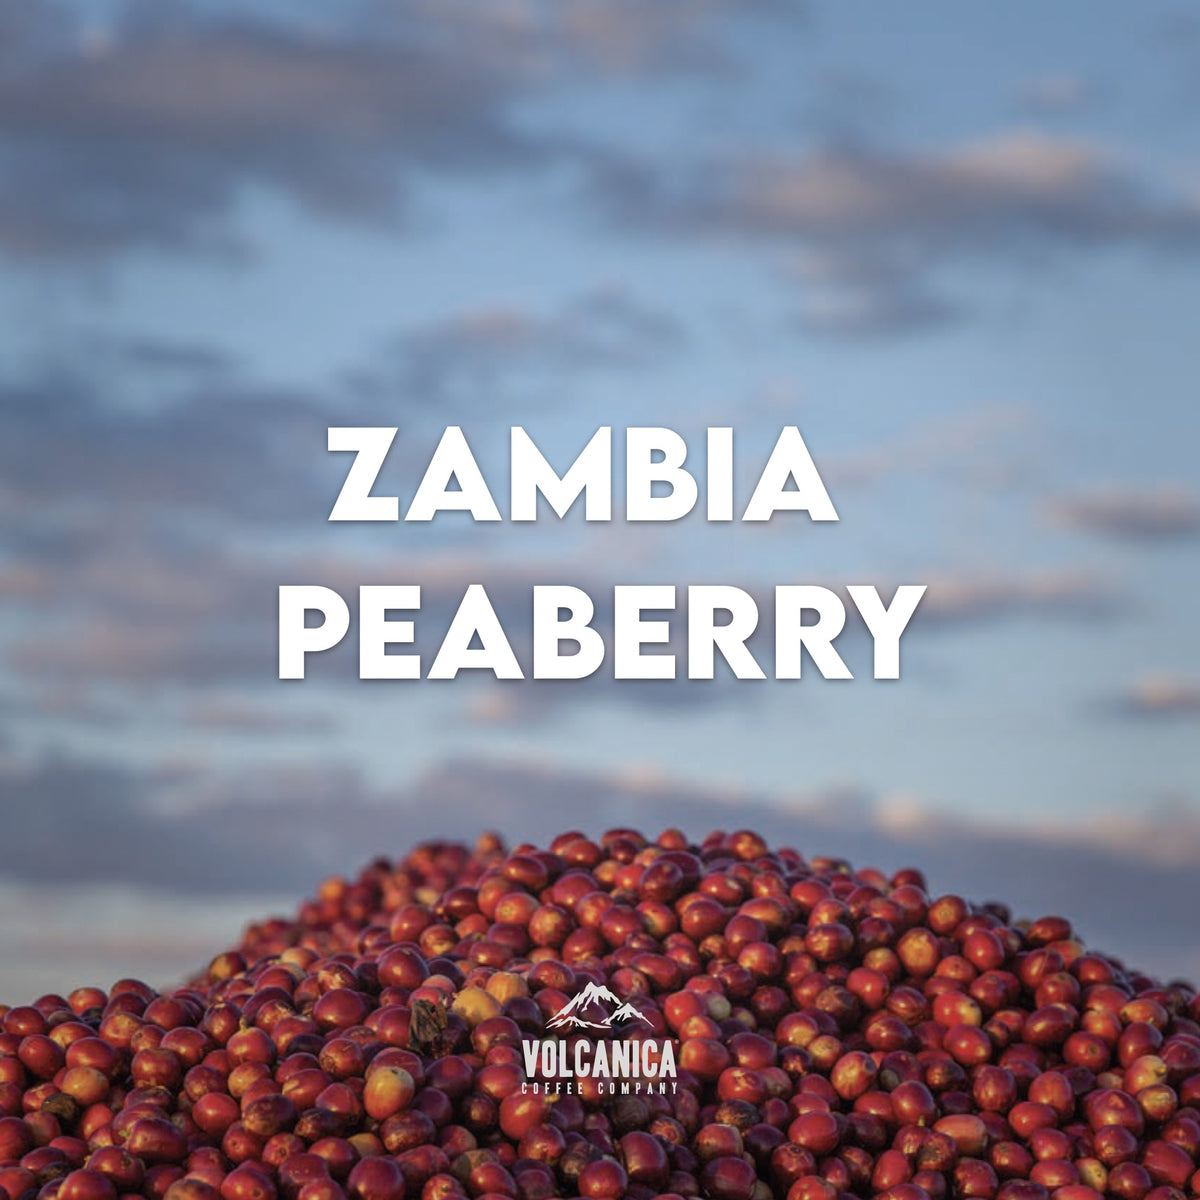 Zambia Peaberry coffee